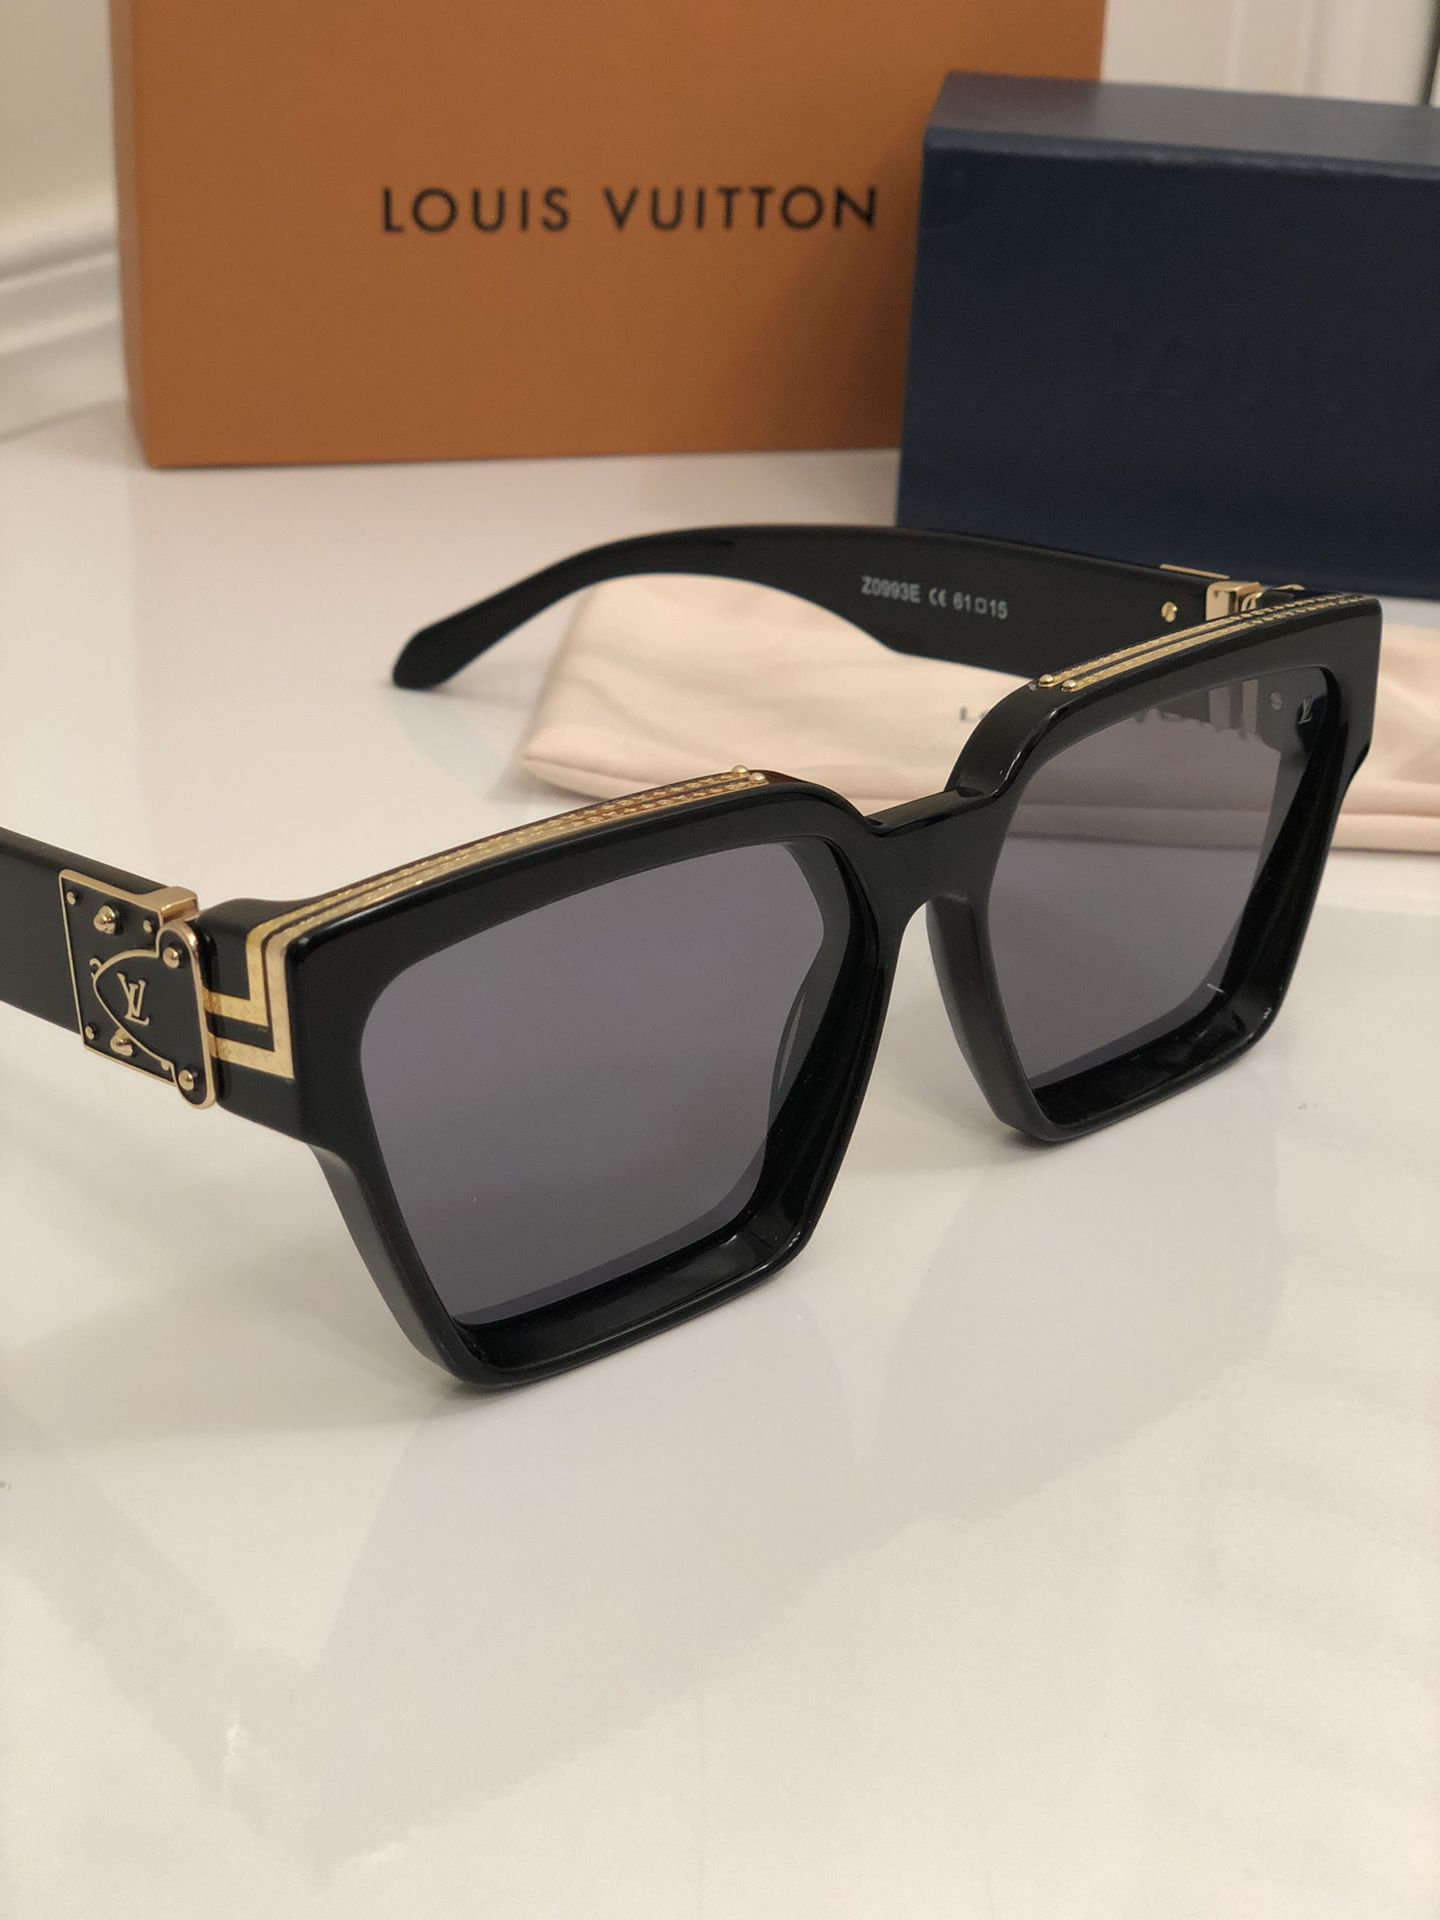 Louis Vuitton 1.1 millionaire Sunglasses for Sale in Tacoma, WA - OfferUp